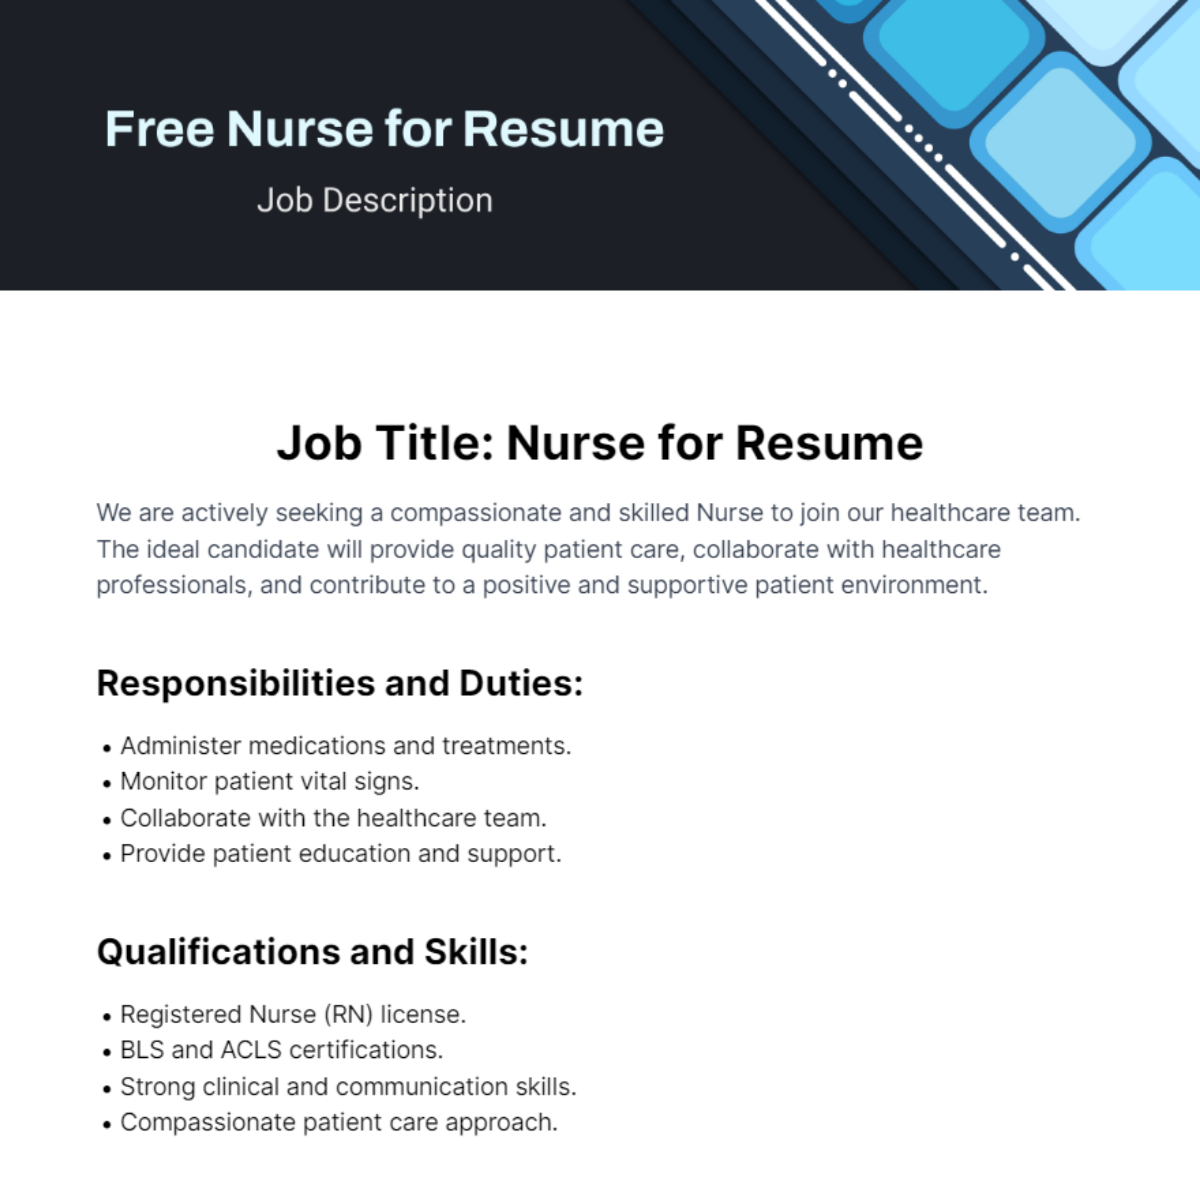 Free Nurse Job Description for Resume Template